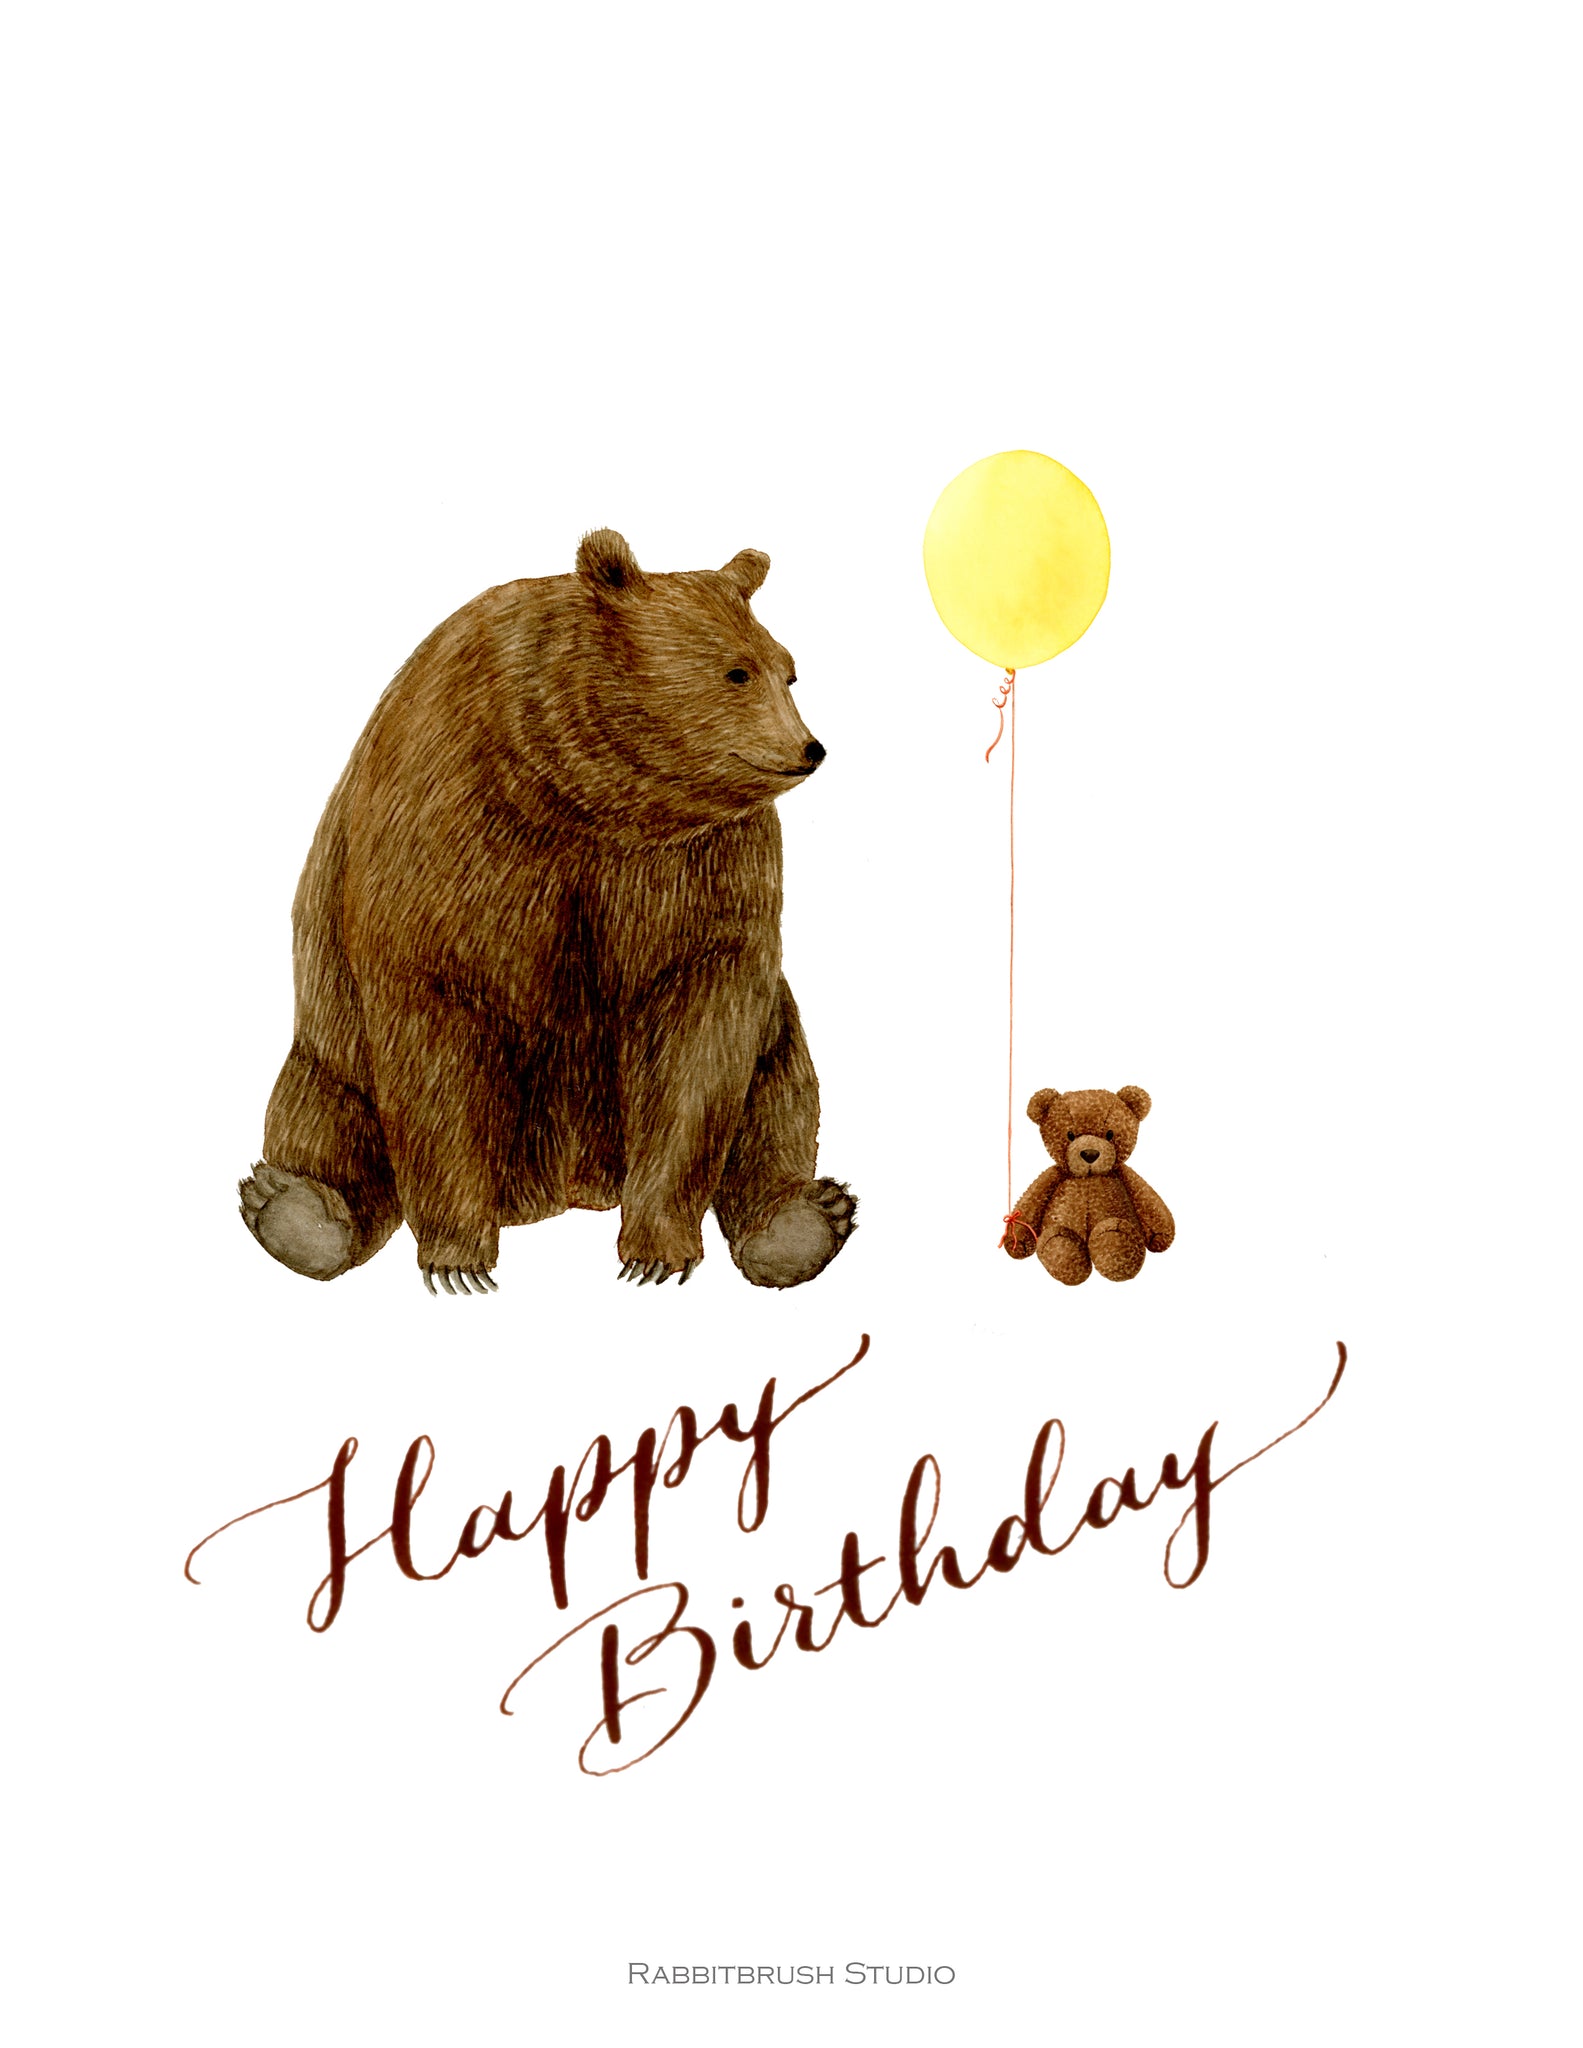 BUILD-A-BEAR Happy Birthday, Bear and Rabbit 2007 Gift Card ( $0 )